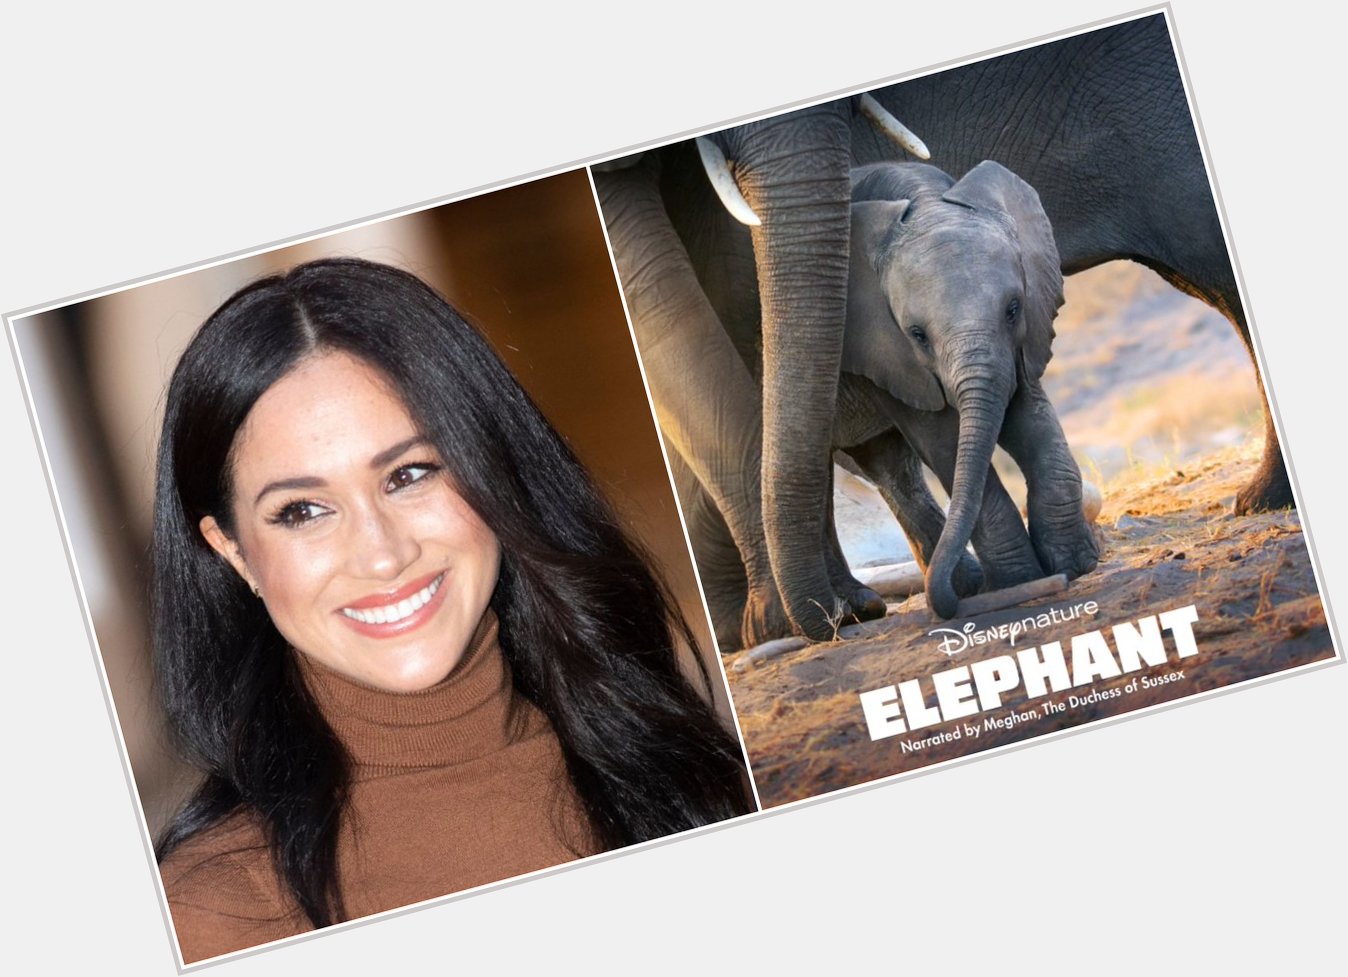 Happy Birthday, Meghan Markle
For Disney, she narrated the documentary Elephant. 